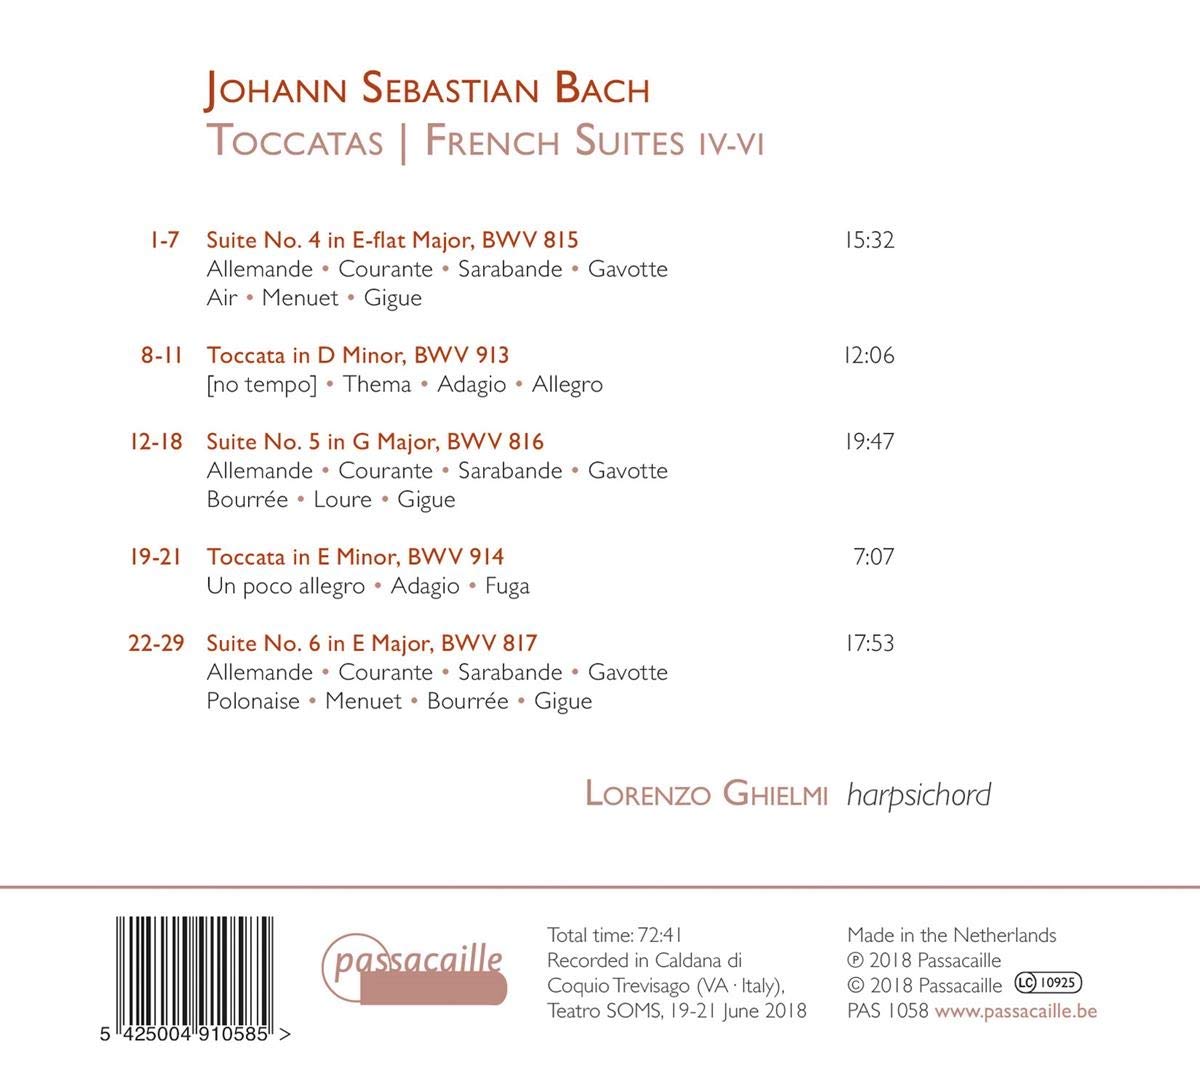 Lorenzo Ghielmi 바흐: 프랑스 모음곡 4, 5, 6번, 토카타 [하프시코드 독주 버전] (Bach: Toccatas and French Suites)